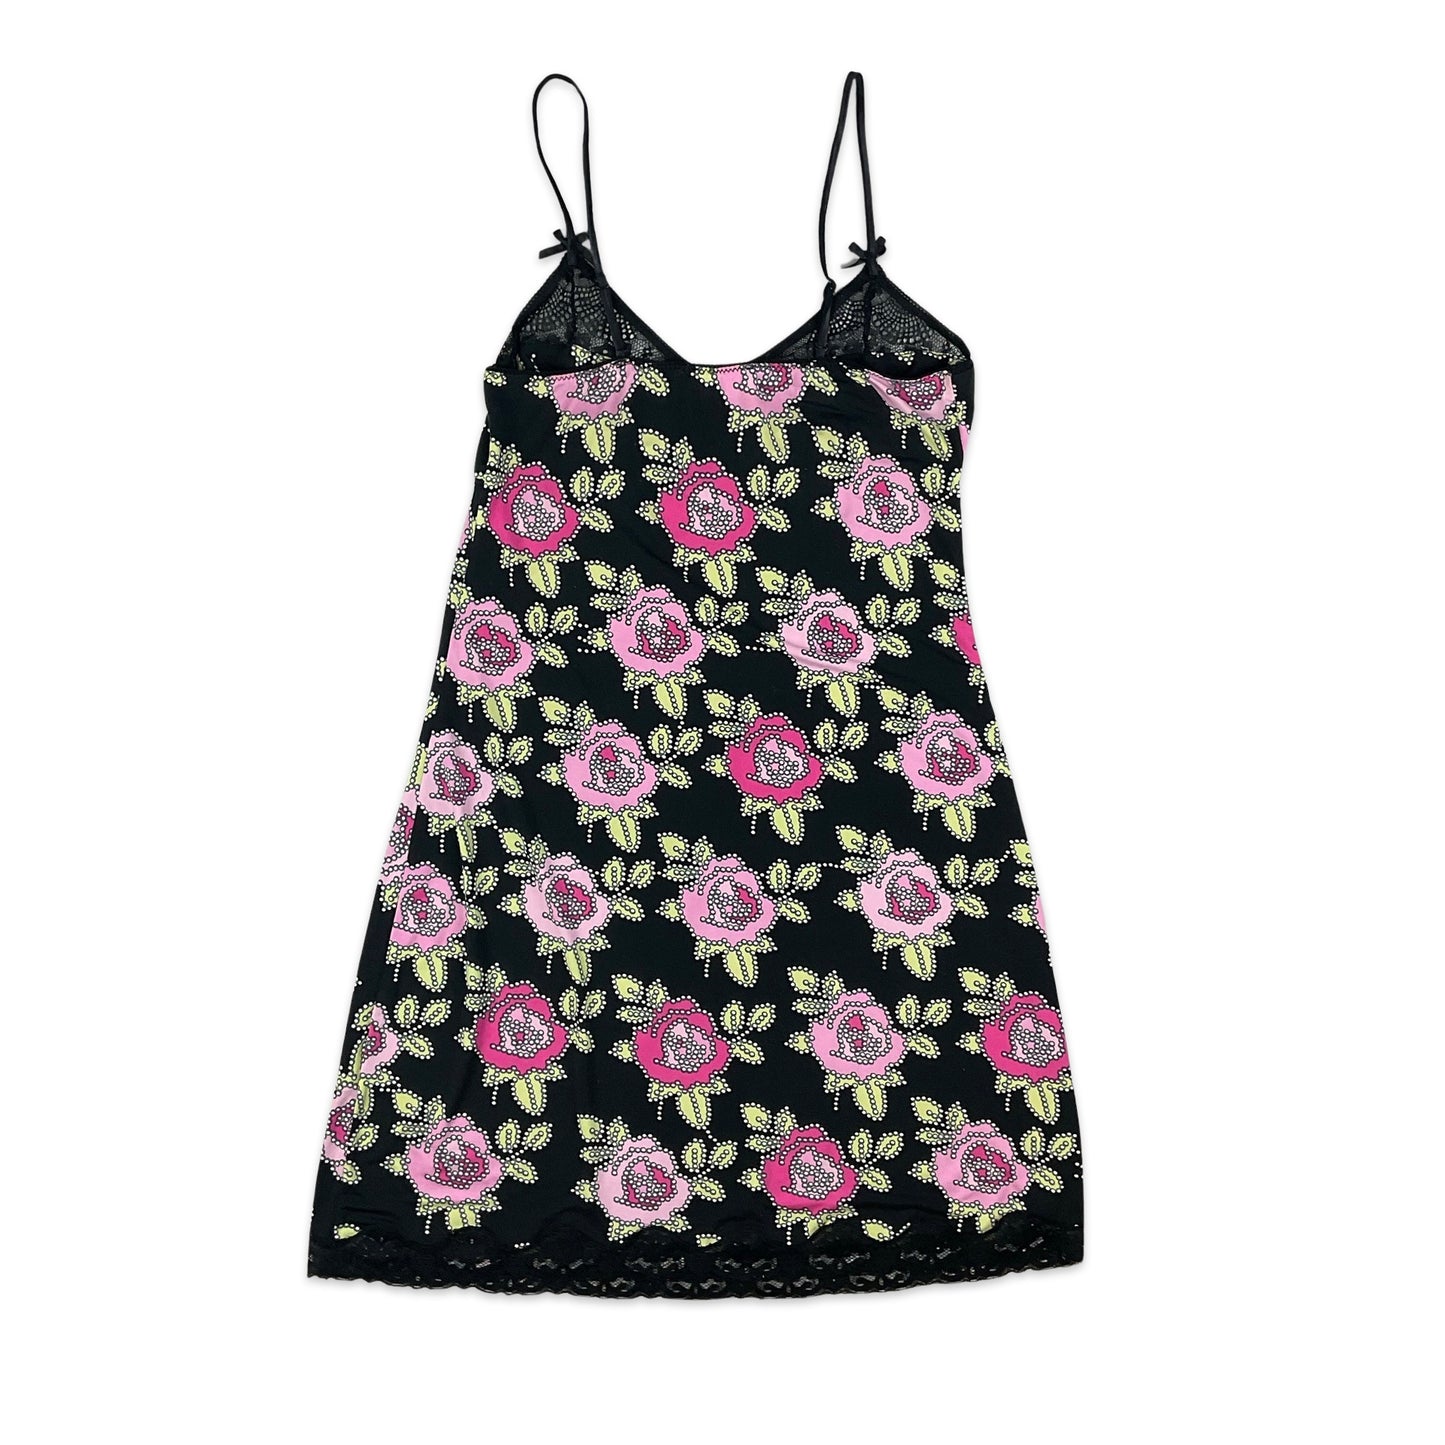 90s Floral Chemise Slip Dress with Lace Trim